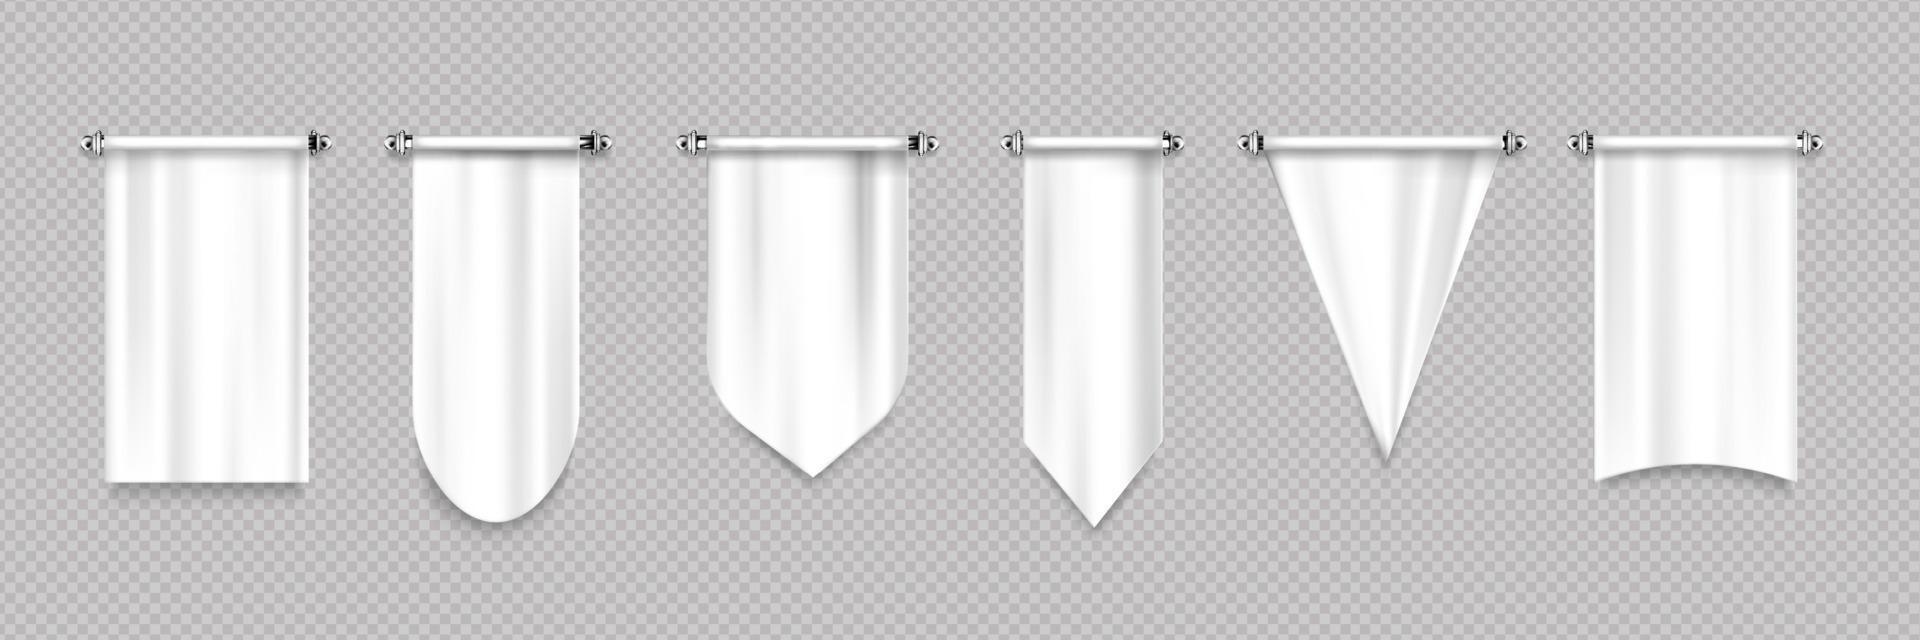 vit duk vimpel flaggor annorlunda former vektor